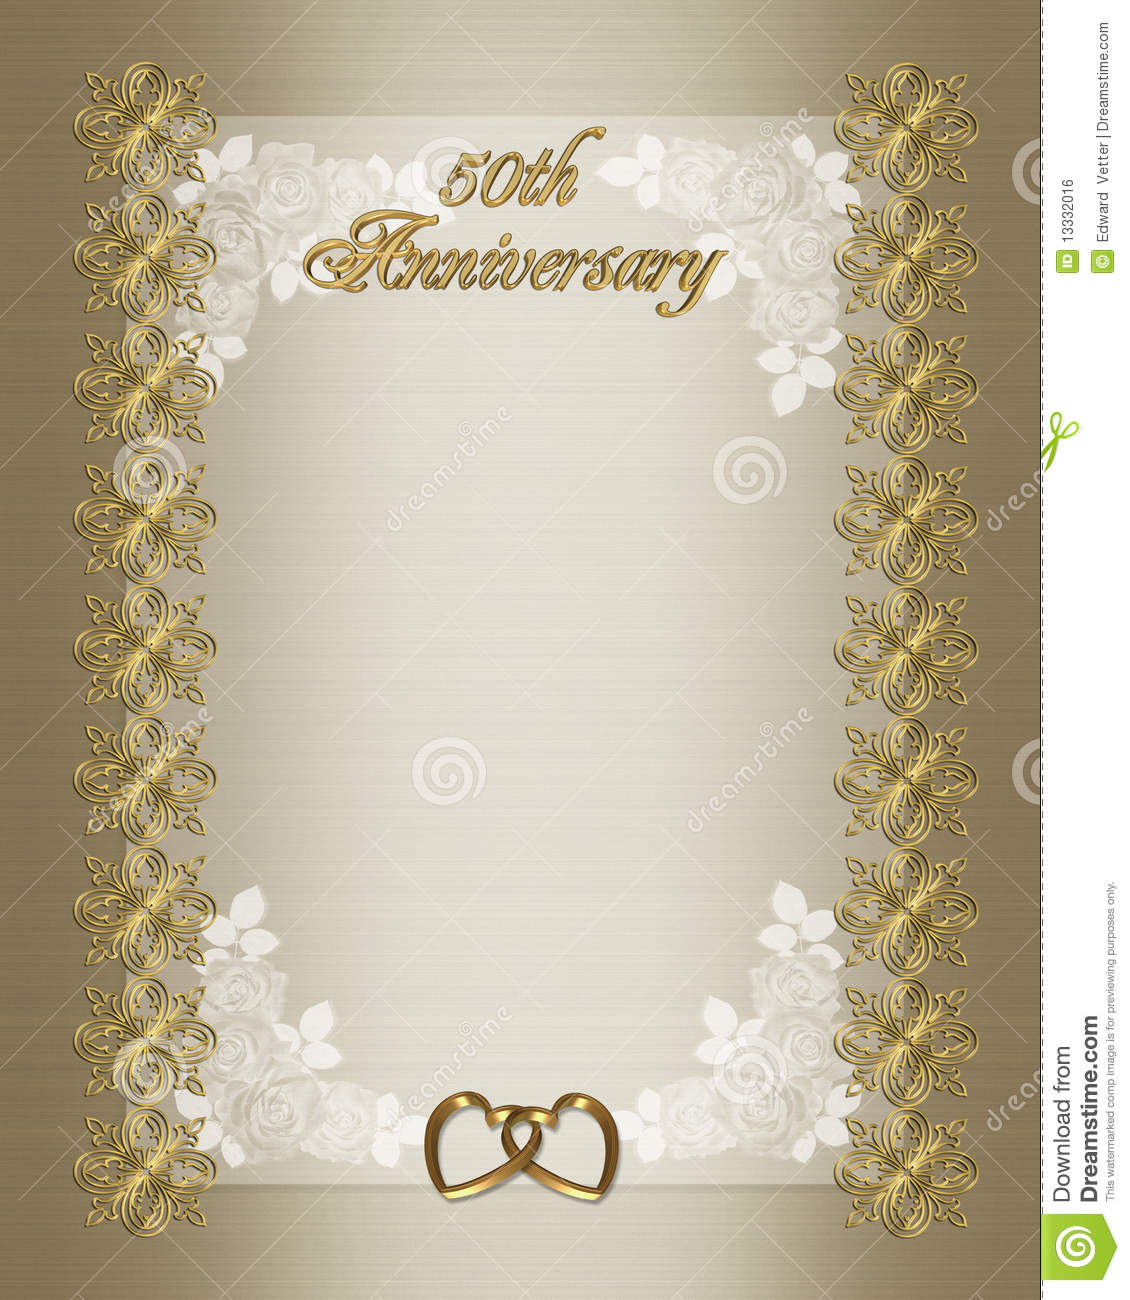 50th Wedding Anniversary Invitation Template Stock Illustration pertaining to dimensions 1130 X 1300